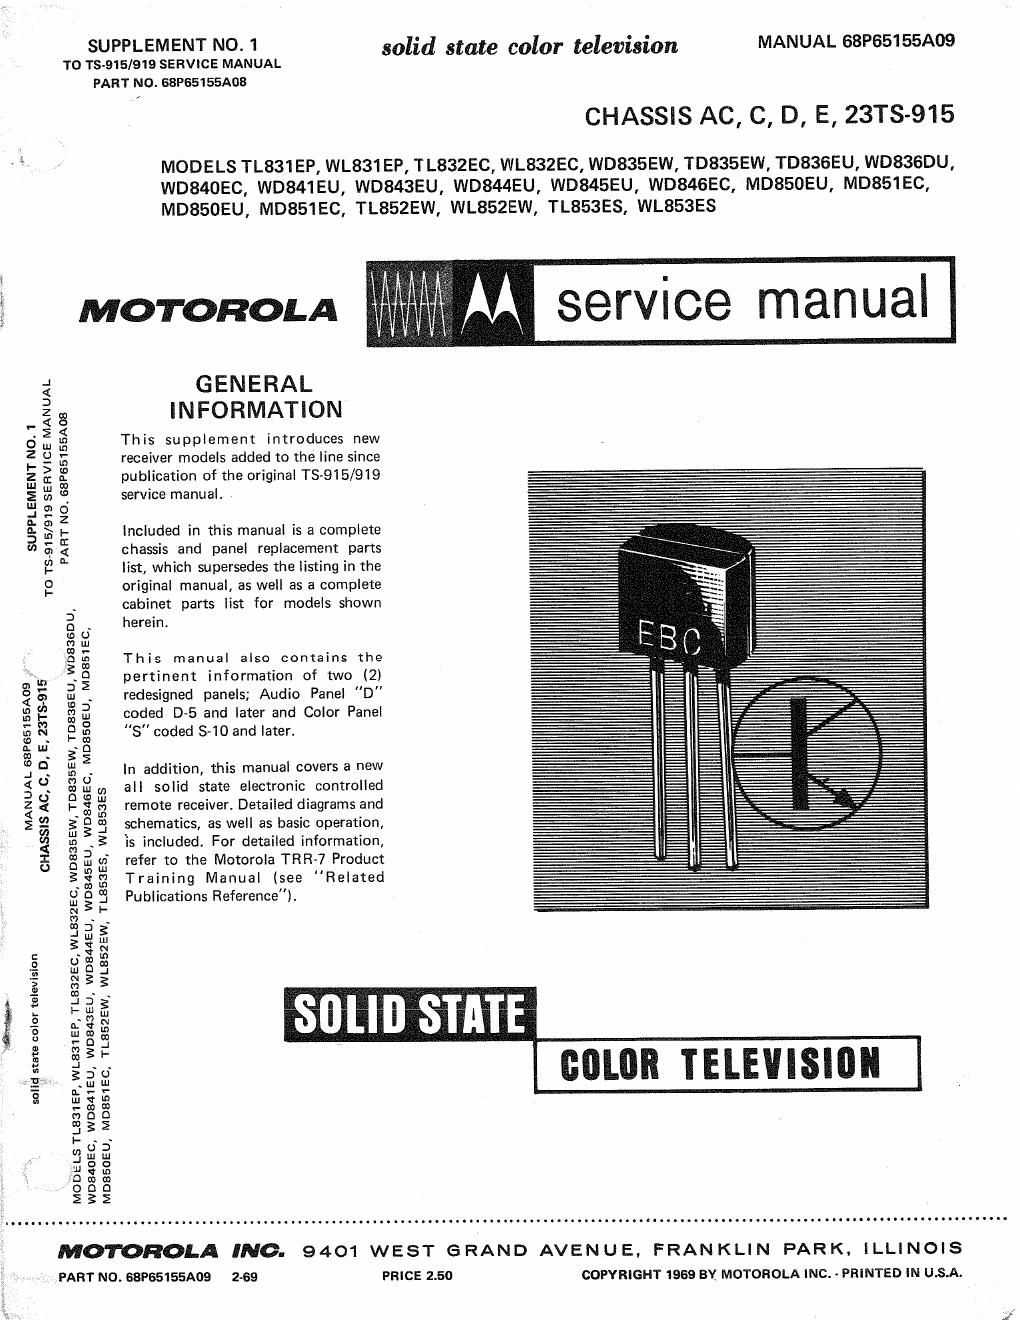 motorola wl 832 ec service manual